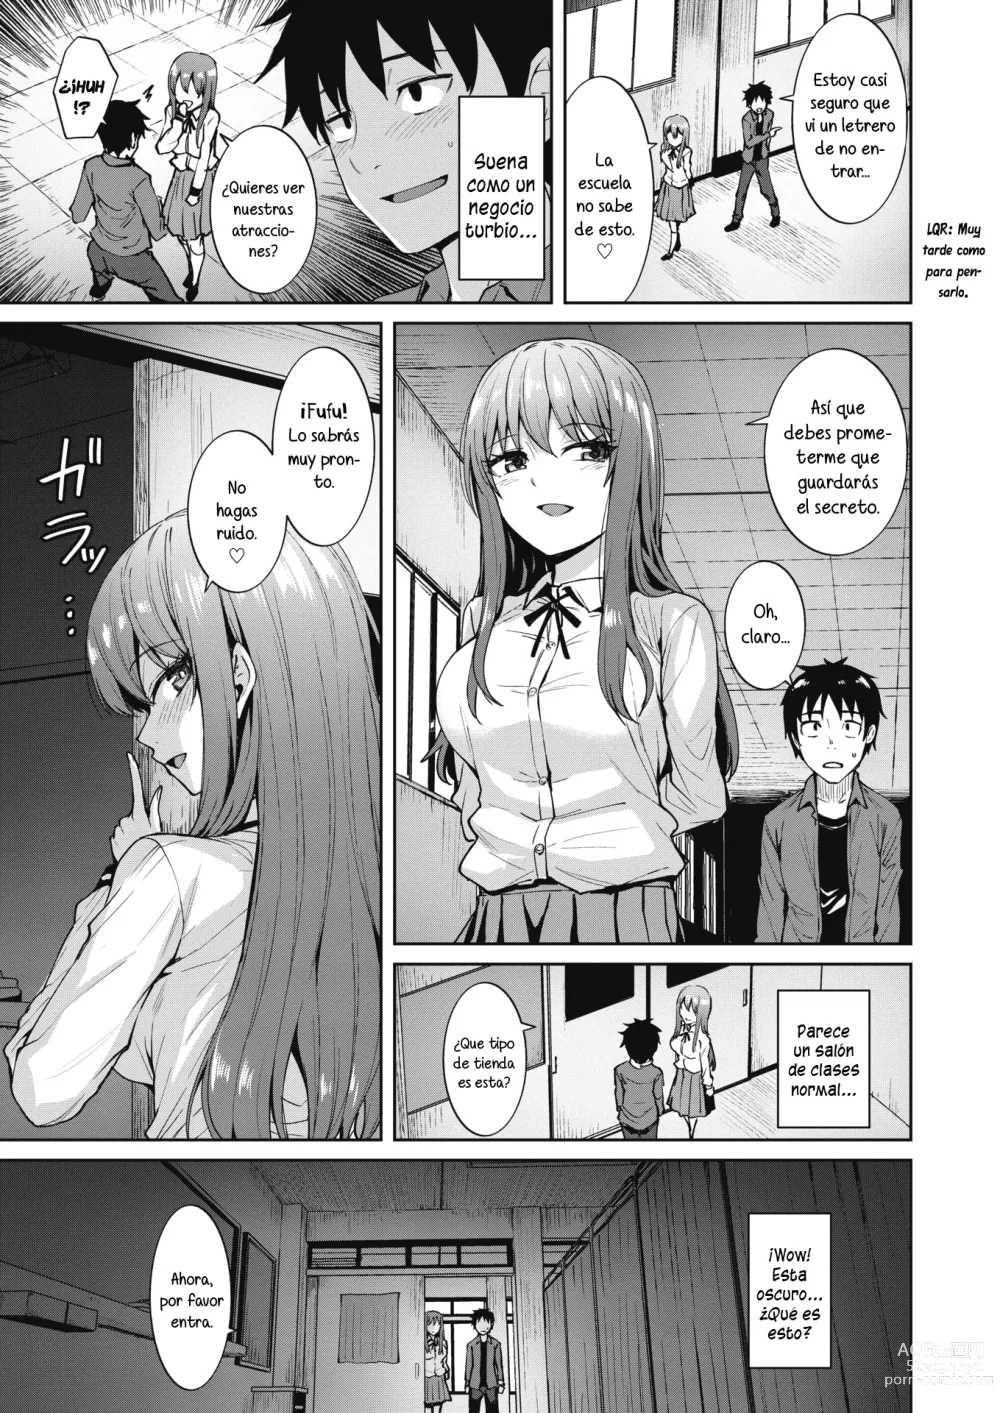 Page 3 of manga Dore ni Suru? - Which ecstasy do you want?